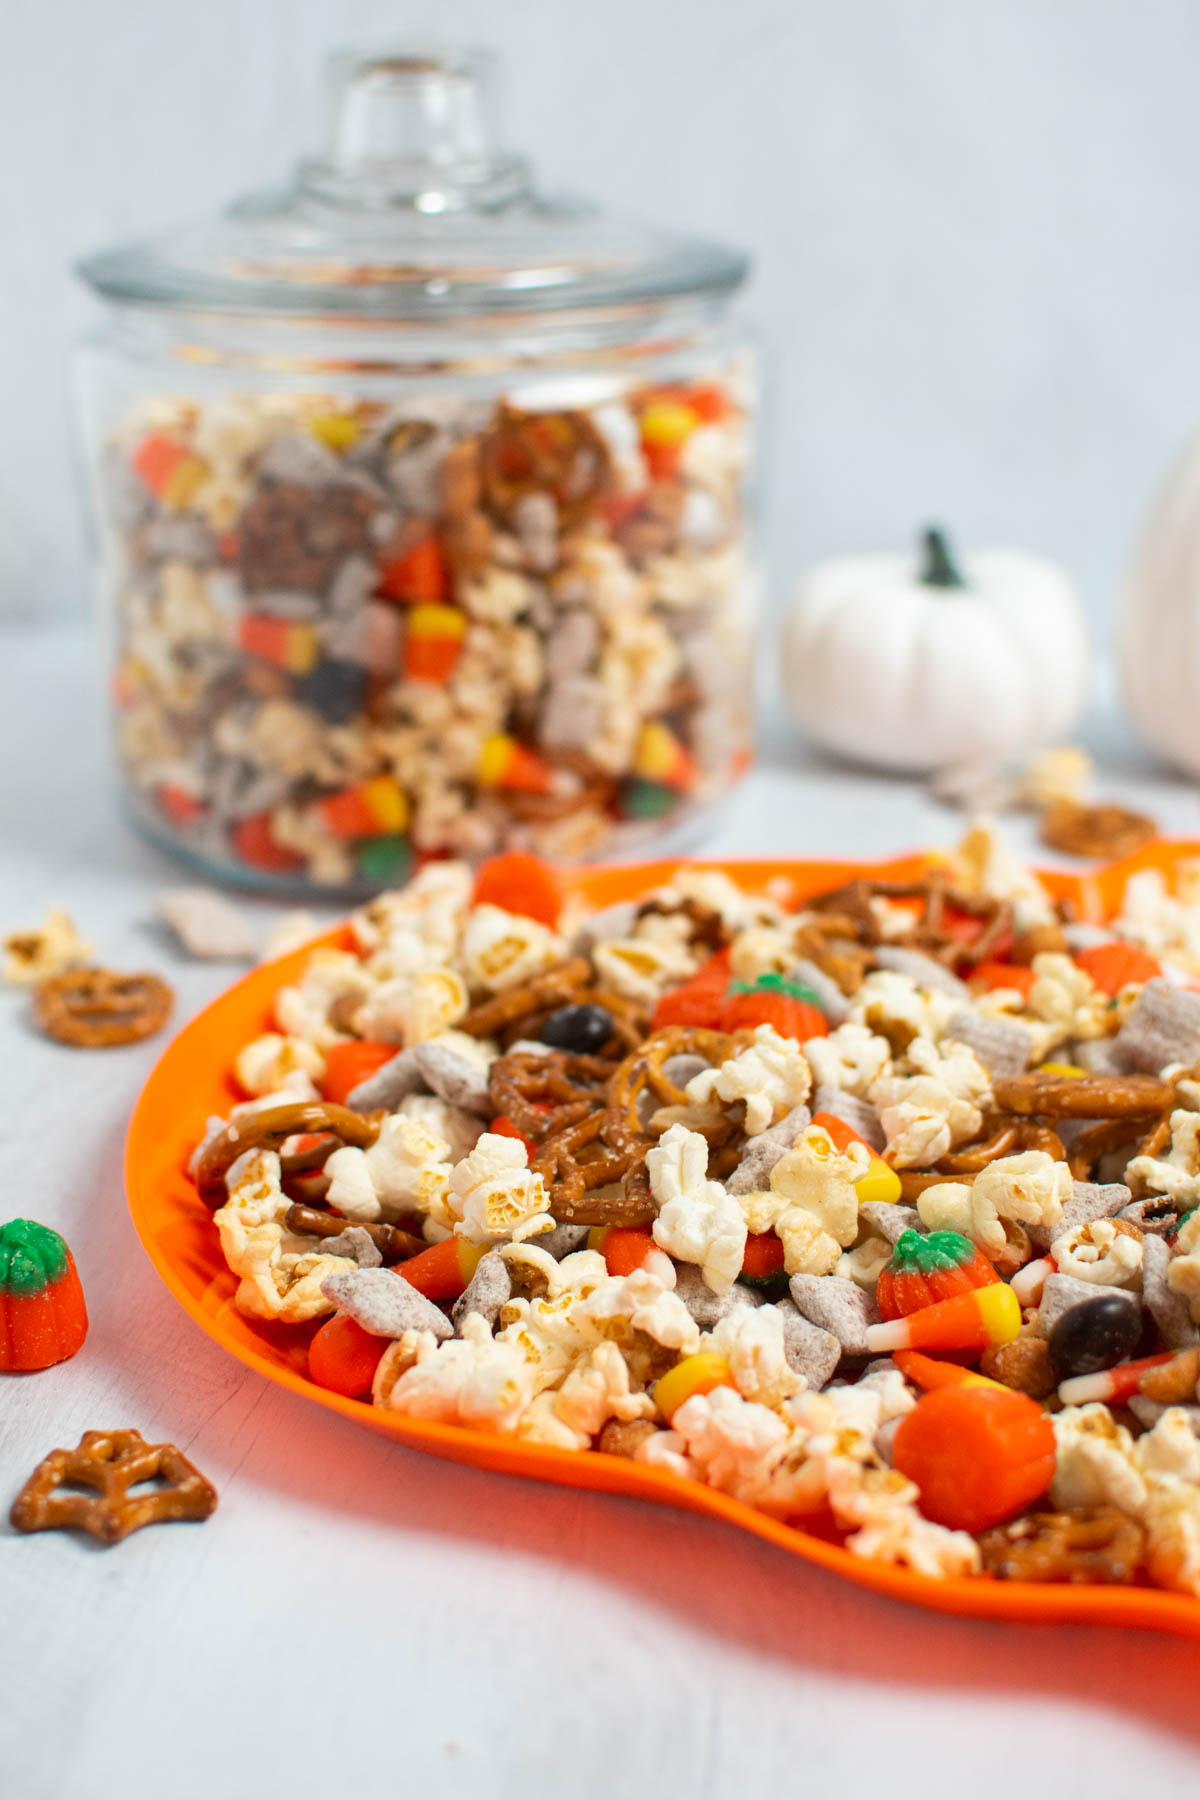 Halloween chex mix on orange pumpkin platter with jar of snack mix in background.